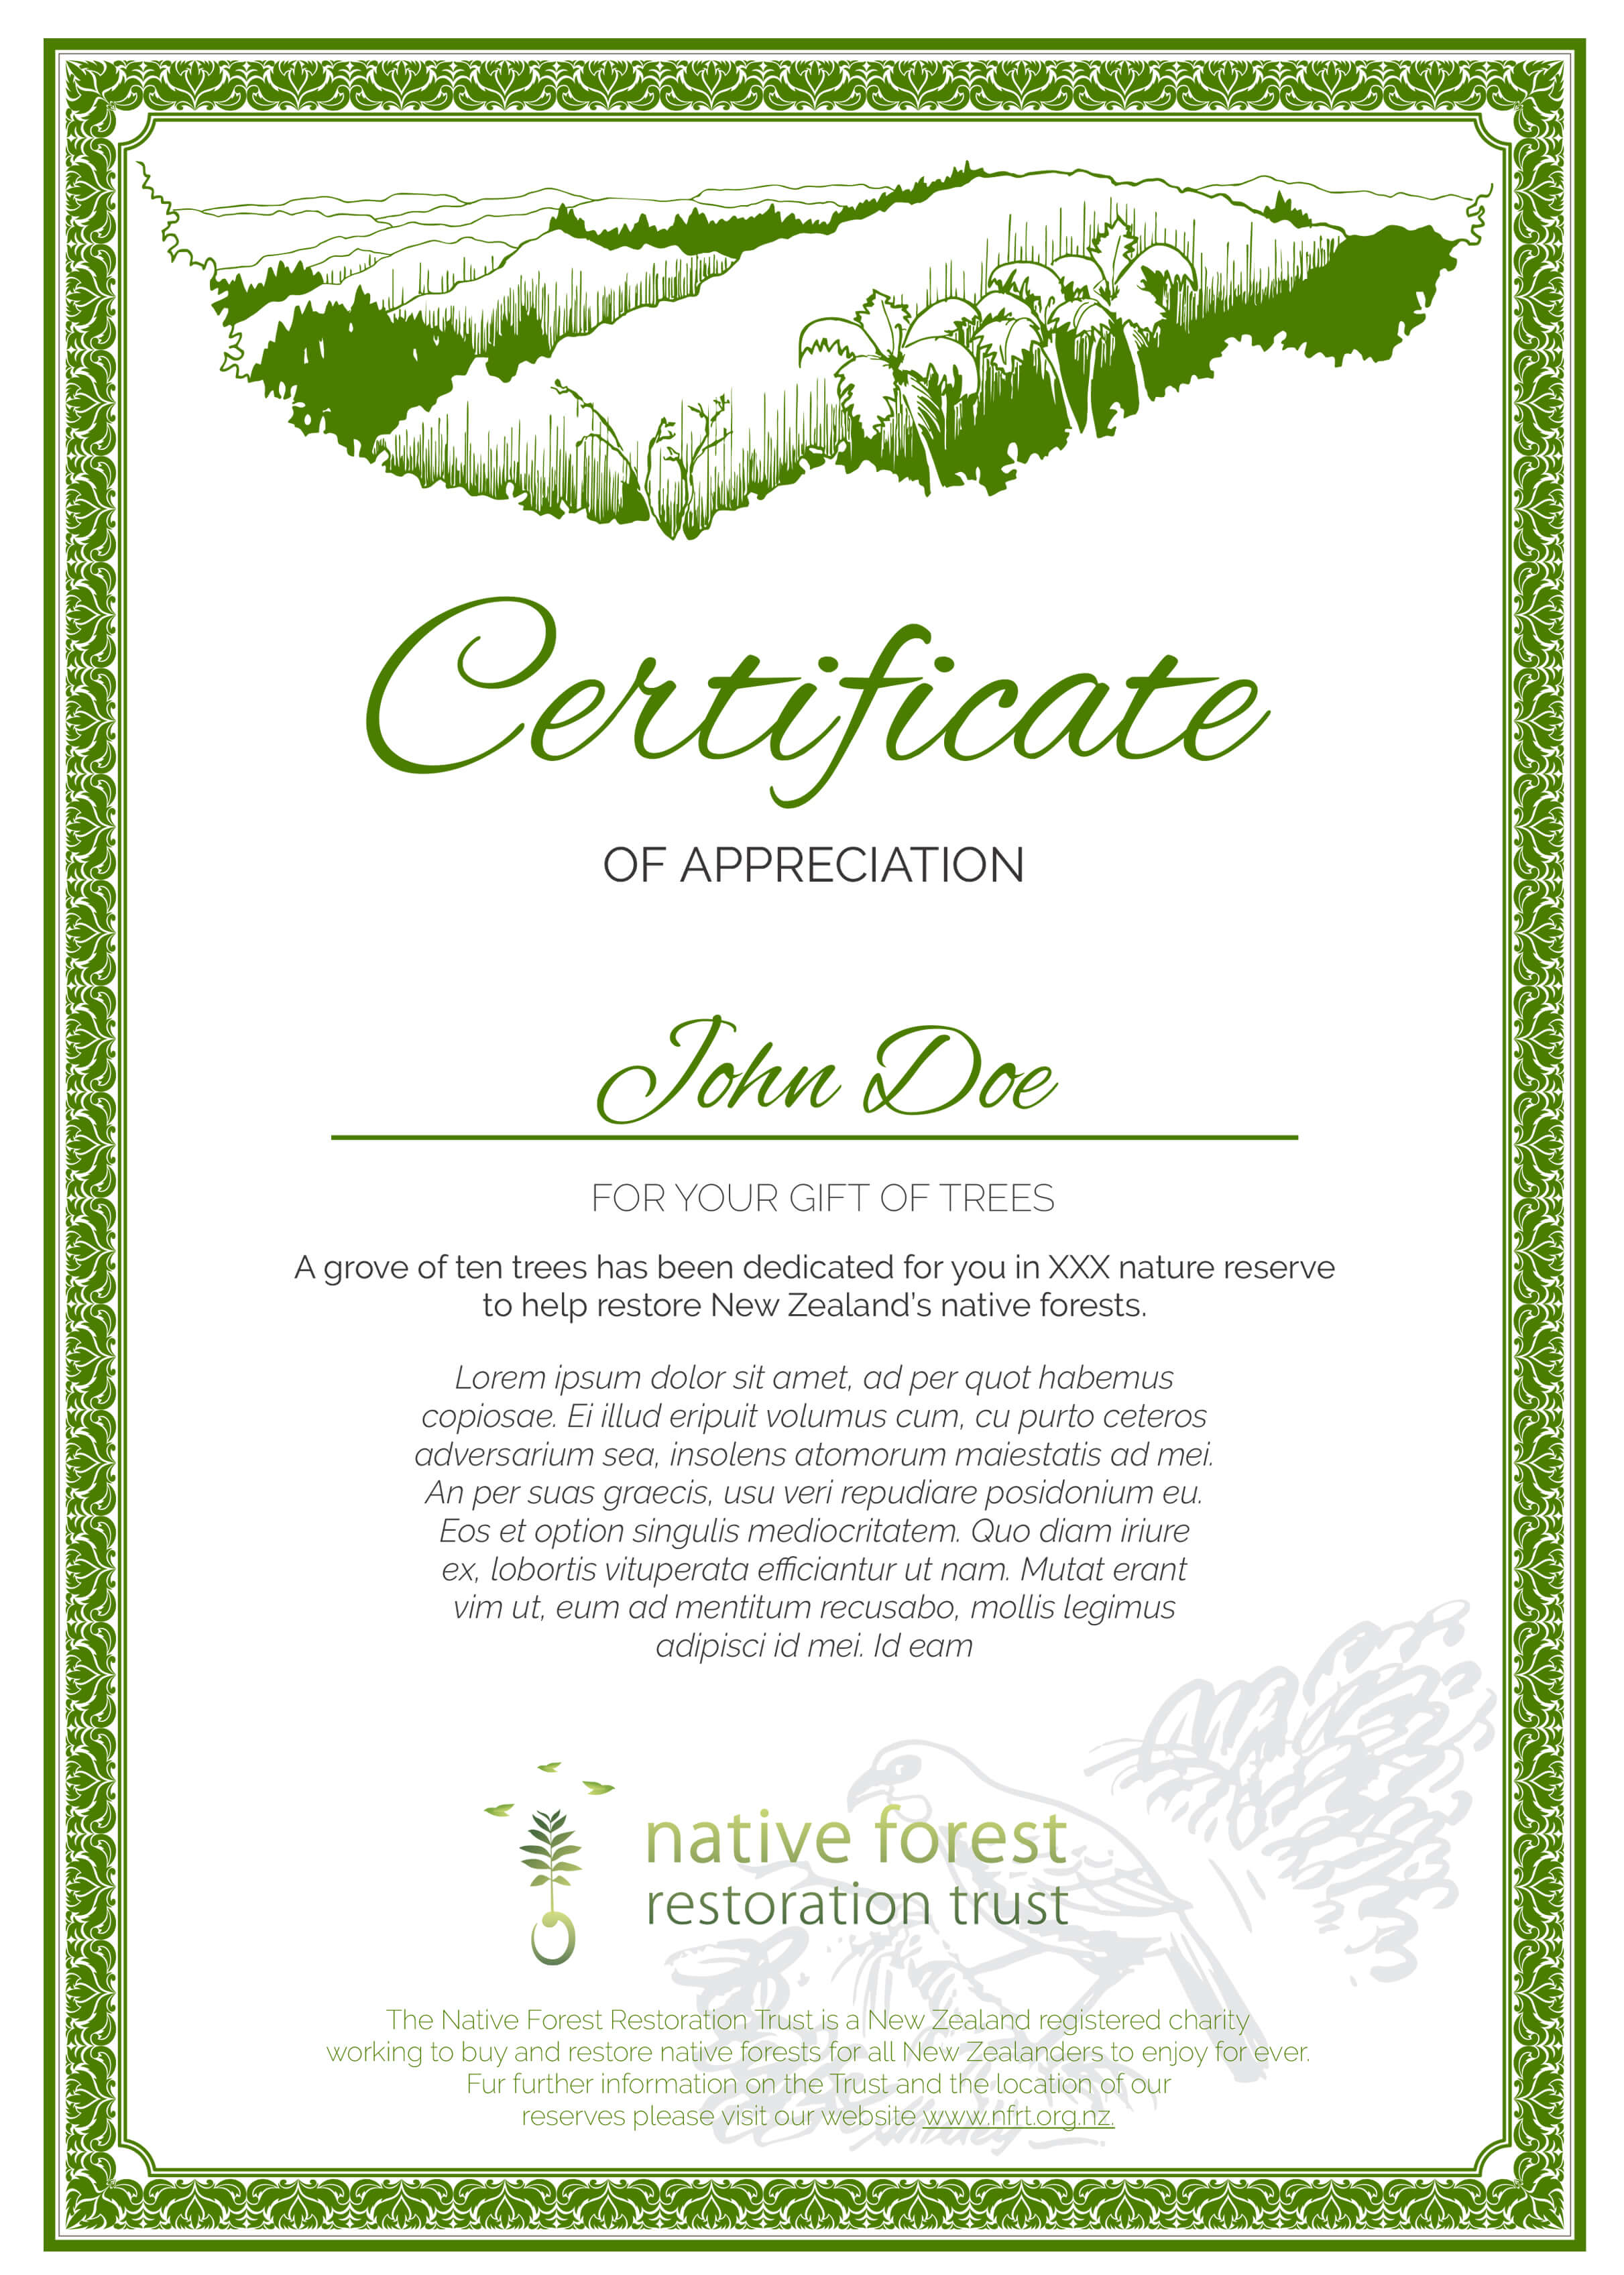 NFRT-certificate-updated